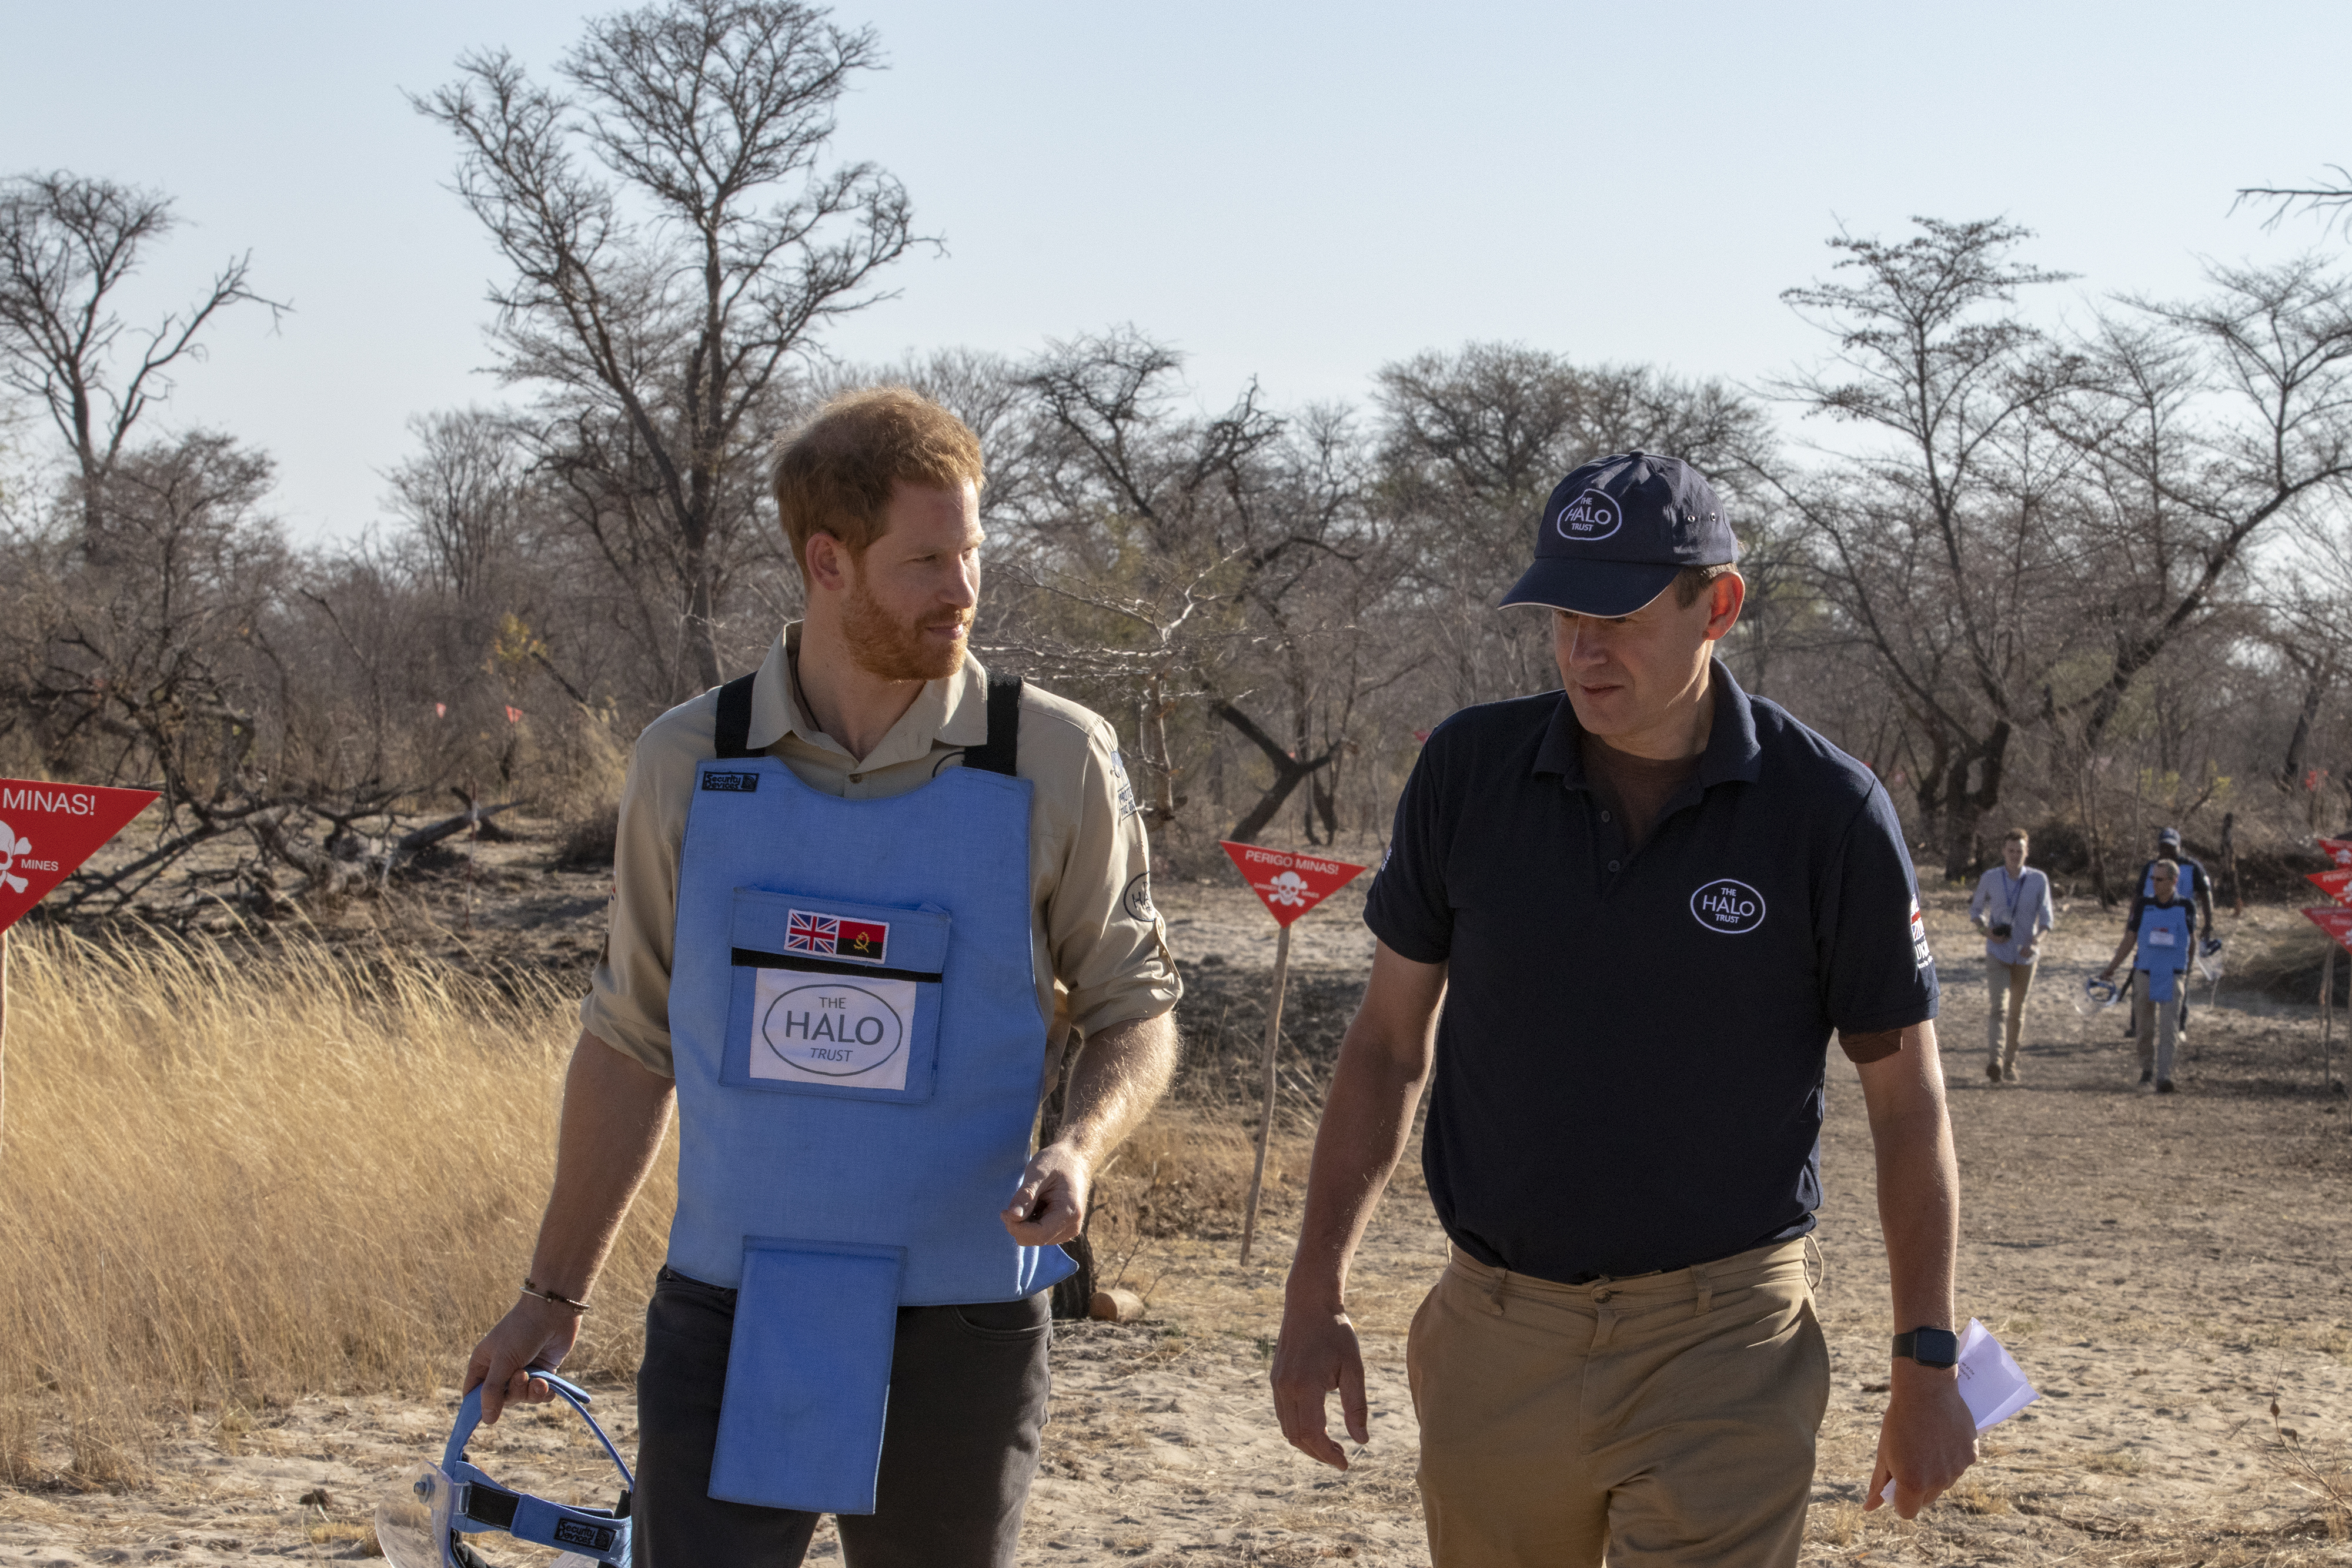 Prince Harry visit to HALO Angola minefield, Dirico. September 2019